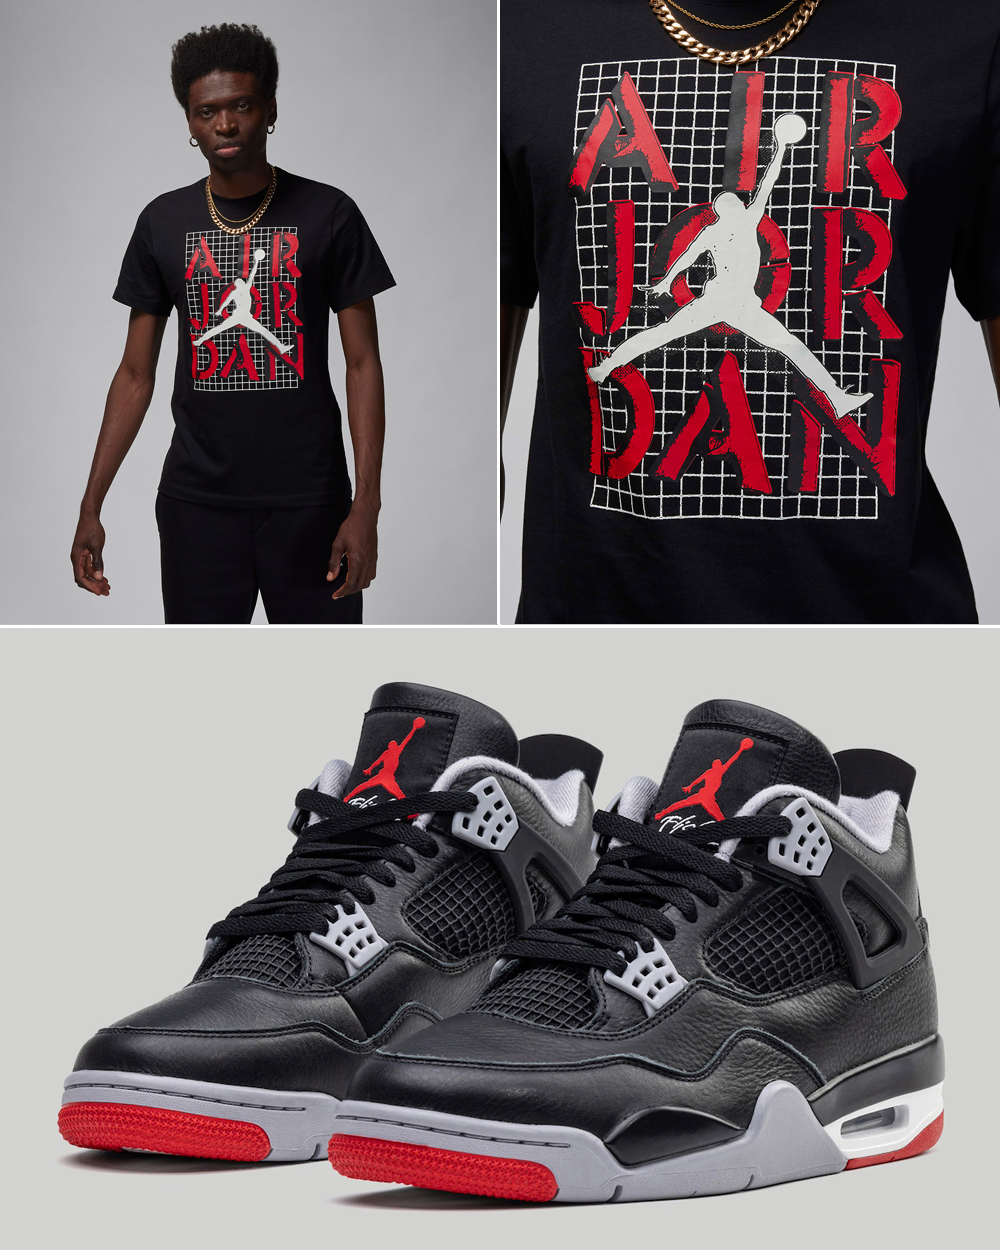 Air-Jordan-4-Bred-Reimagined-Shirt